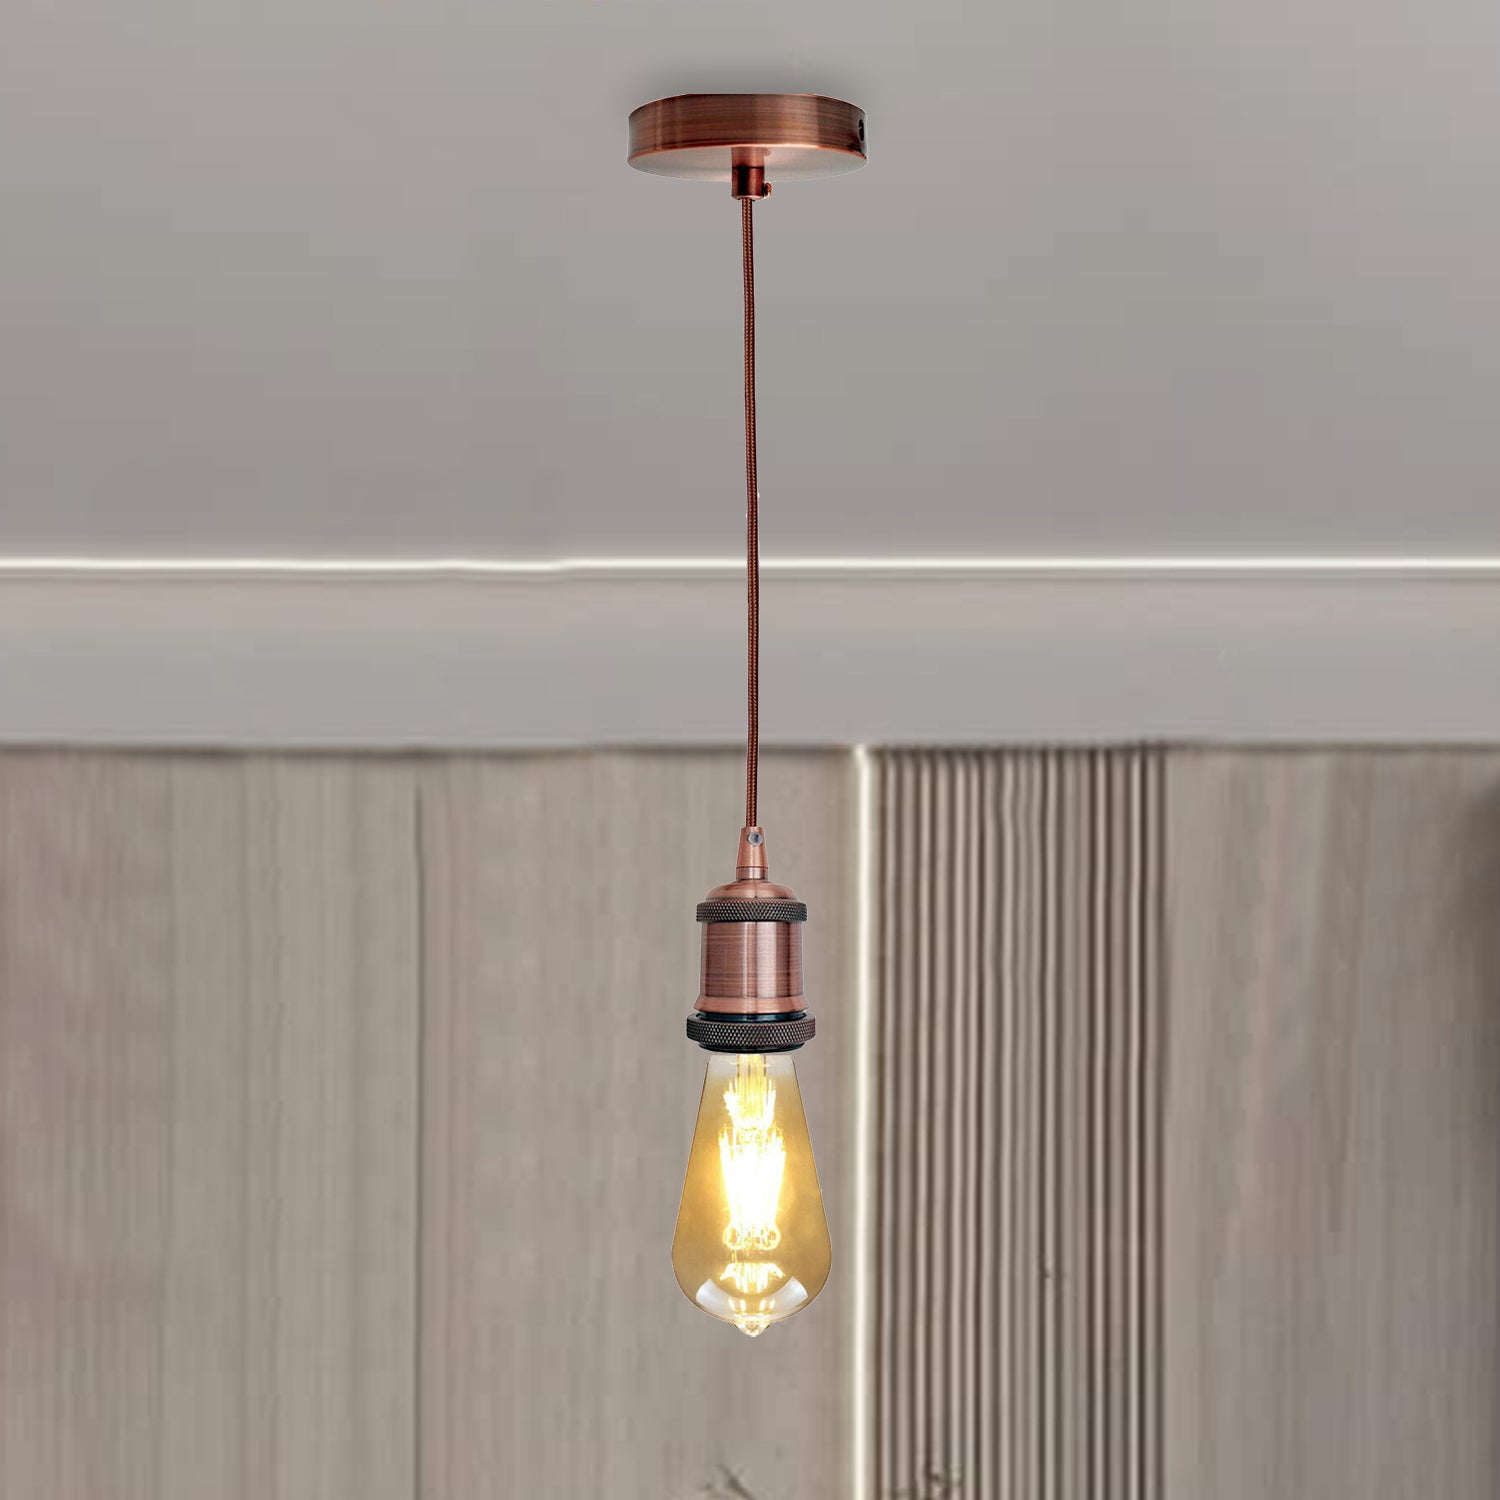 Retro Industrial Vintage Pendant Ceiling Rose Fitting E27 Lamp Bulb Holder - Application Image 1